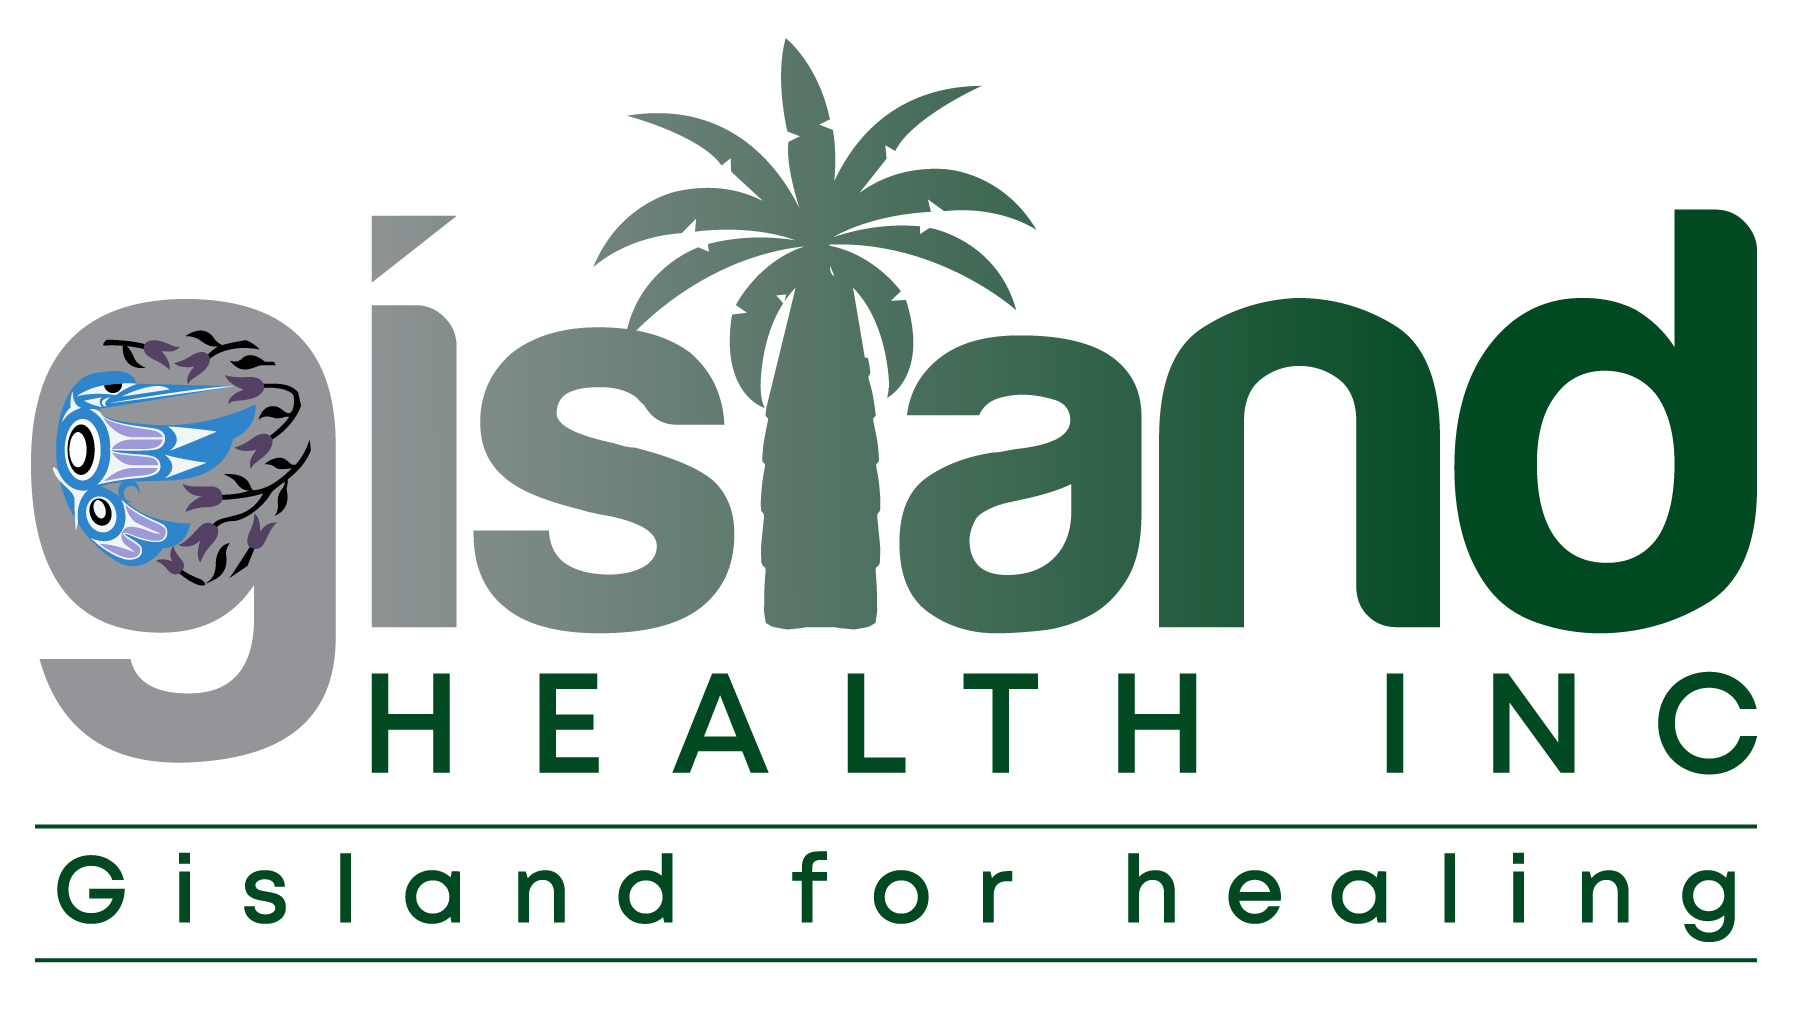 Gisland Health